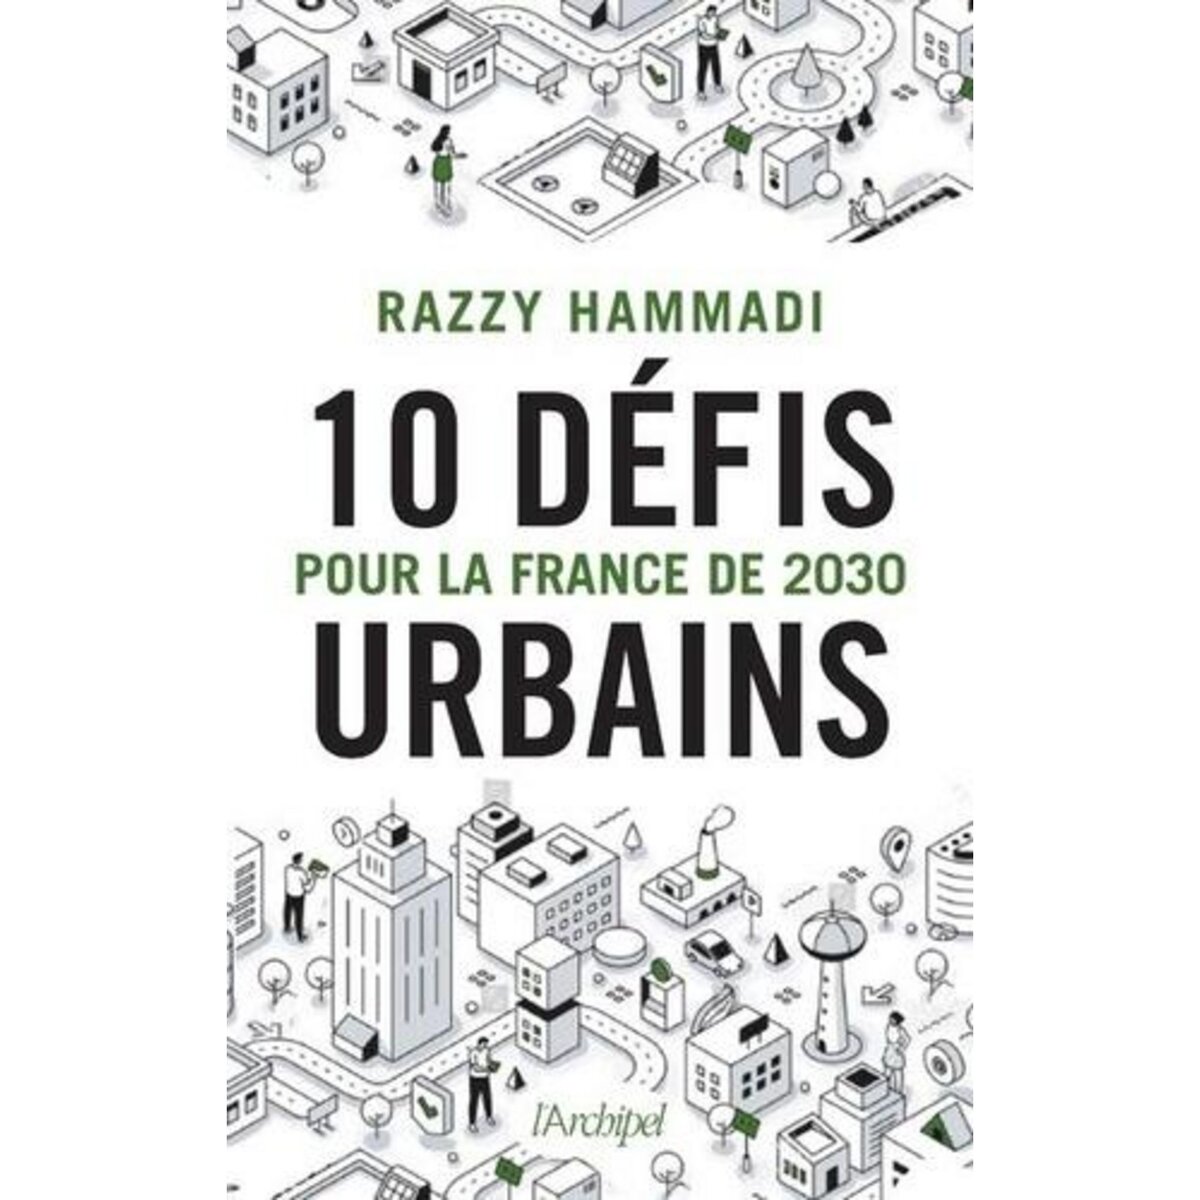  10 DEFIS URBAINS POUR LA FRANCE DE 2030, Hammadi Razzy